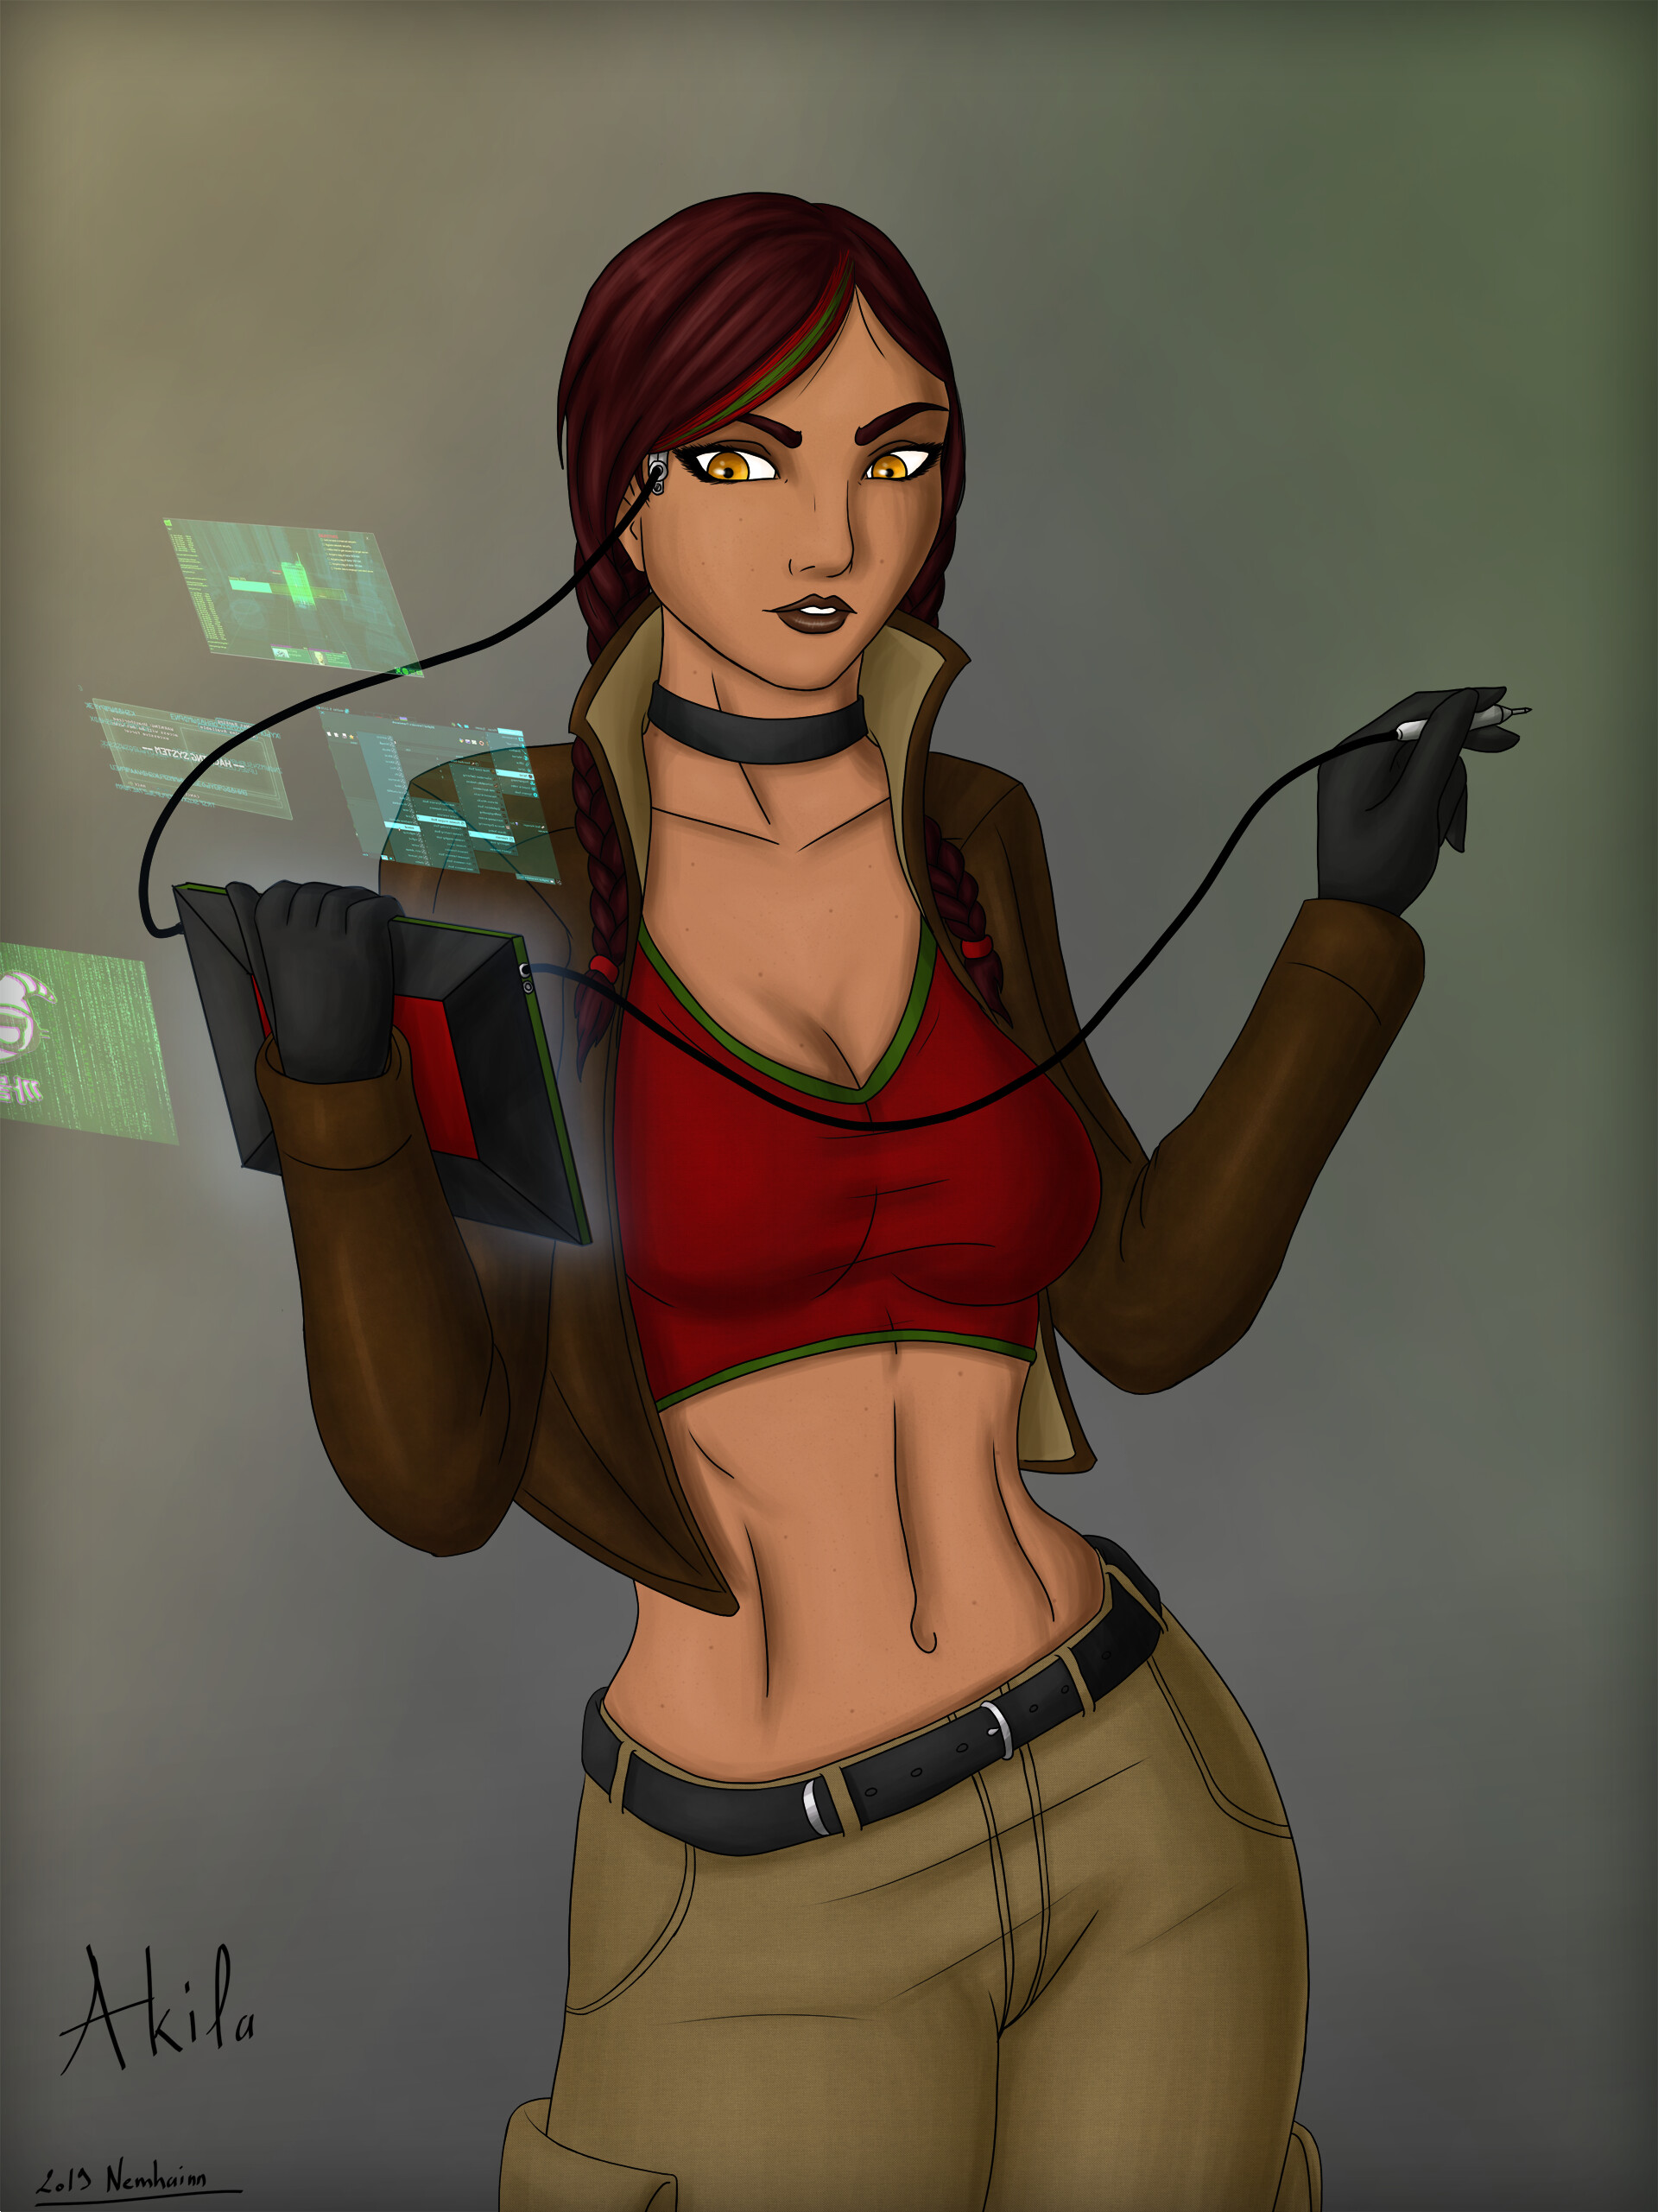  Hacks - Shadowrun Female Player